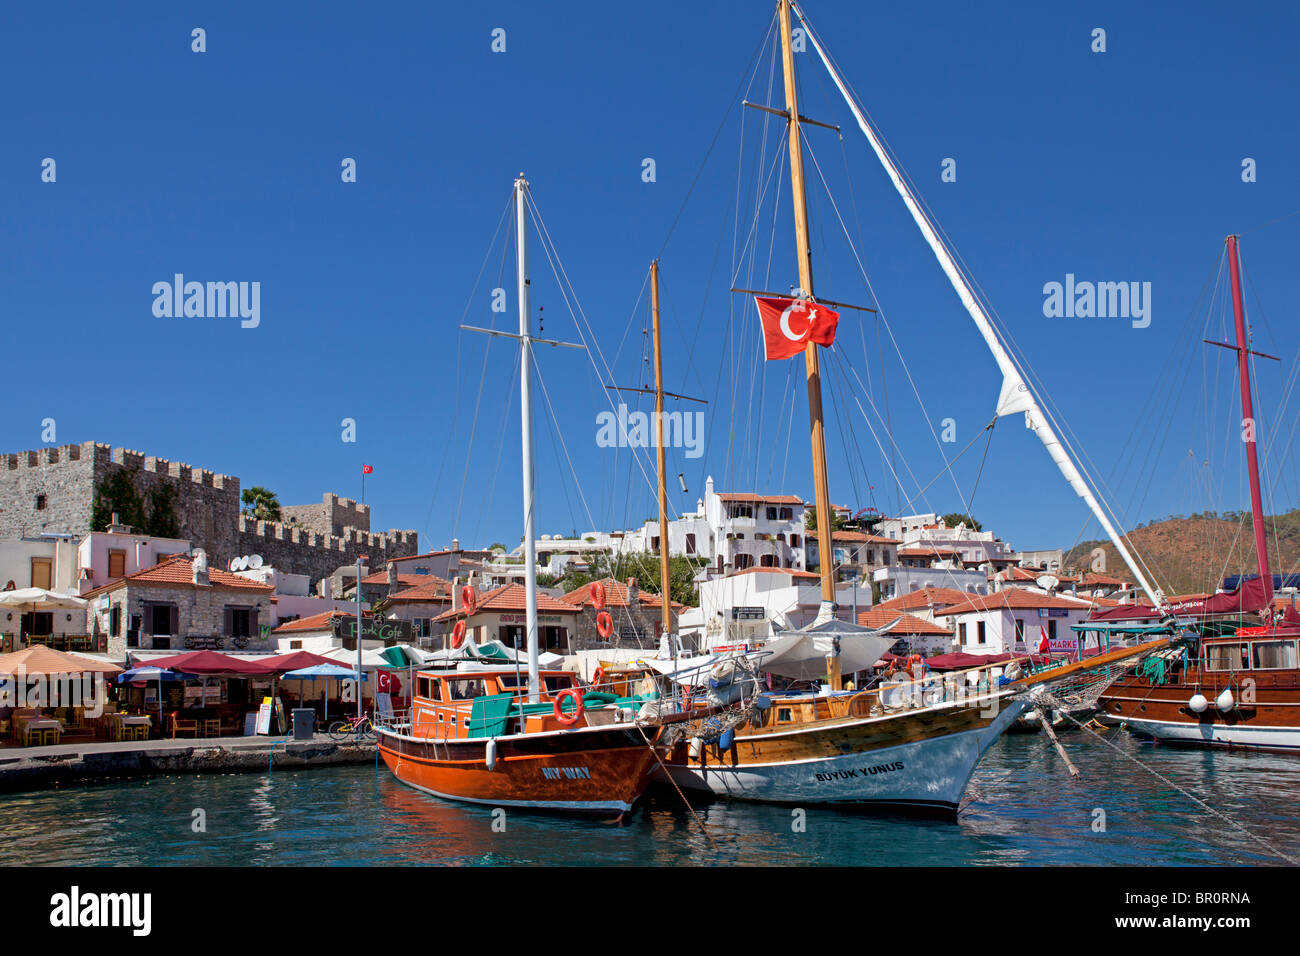 Porto di Marmaris, turca del Mar Egeo, Turchia Foto Stock